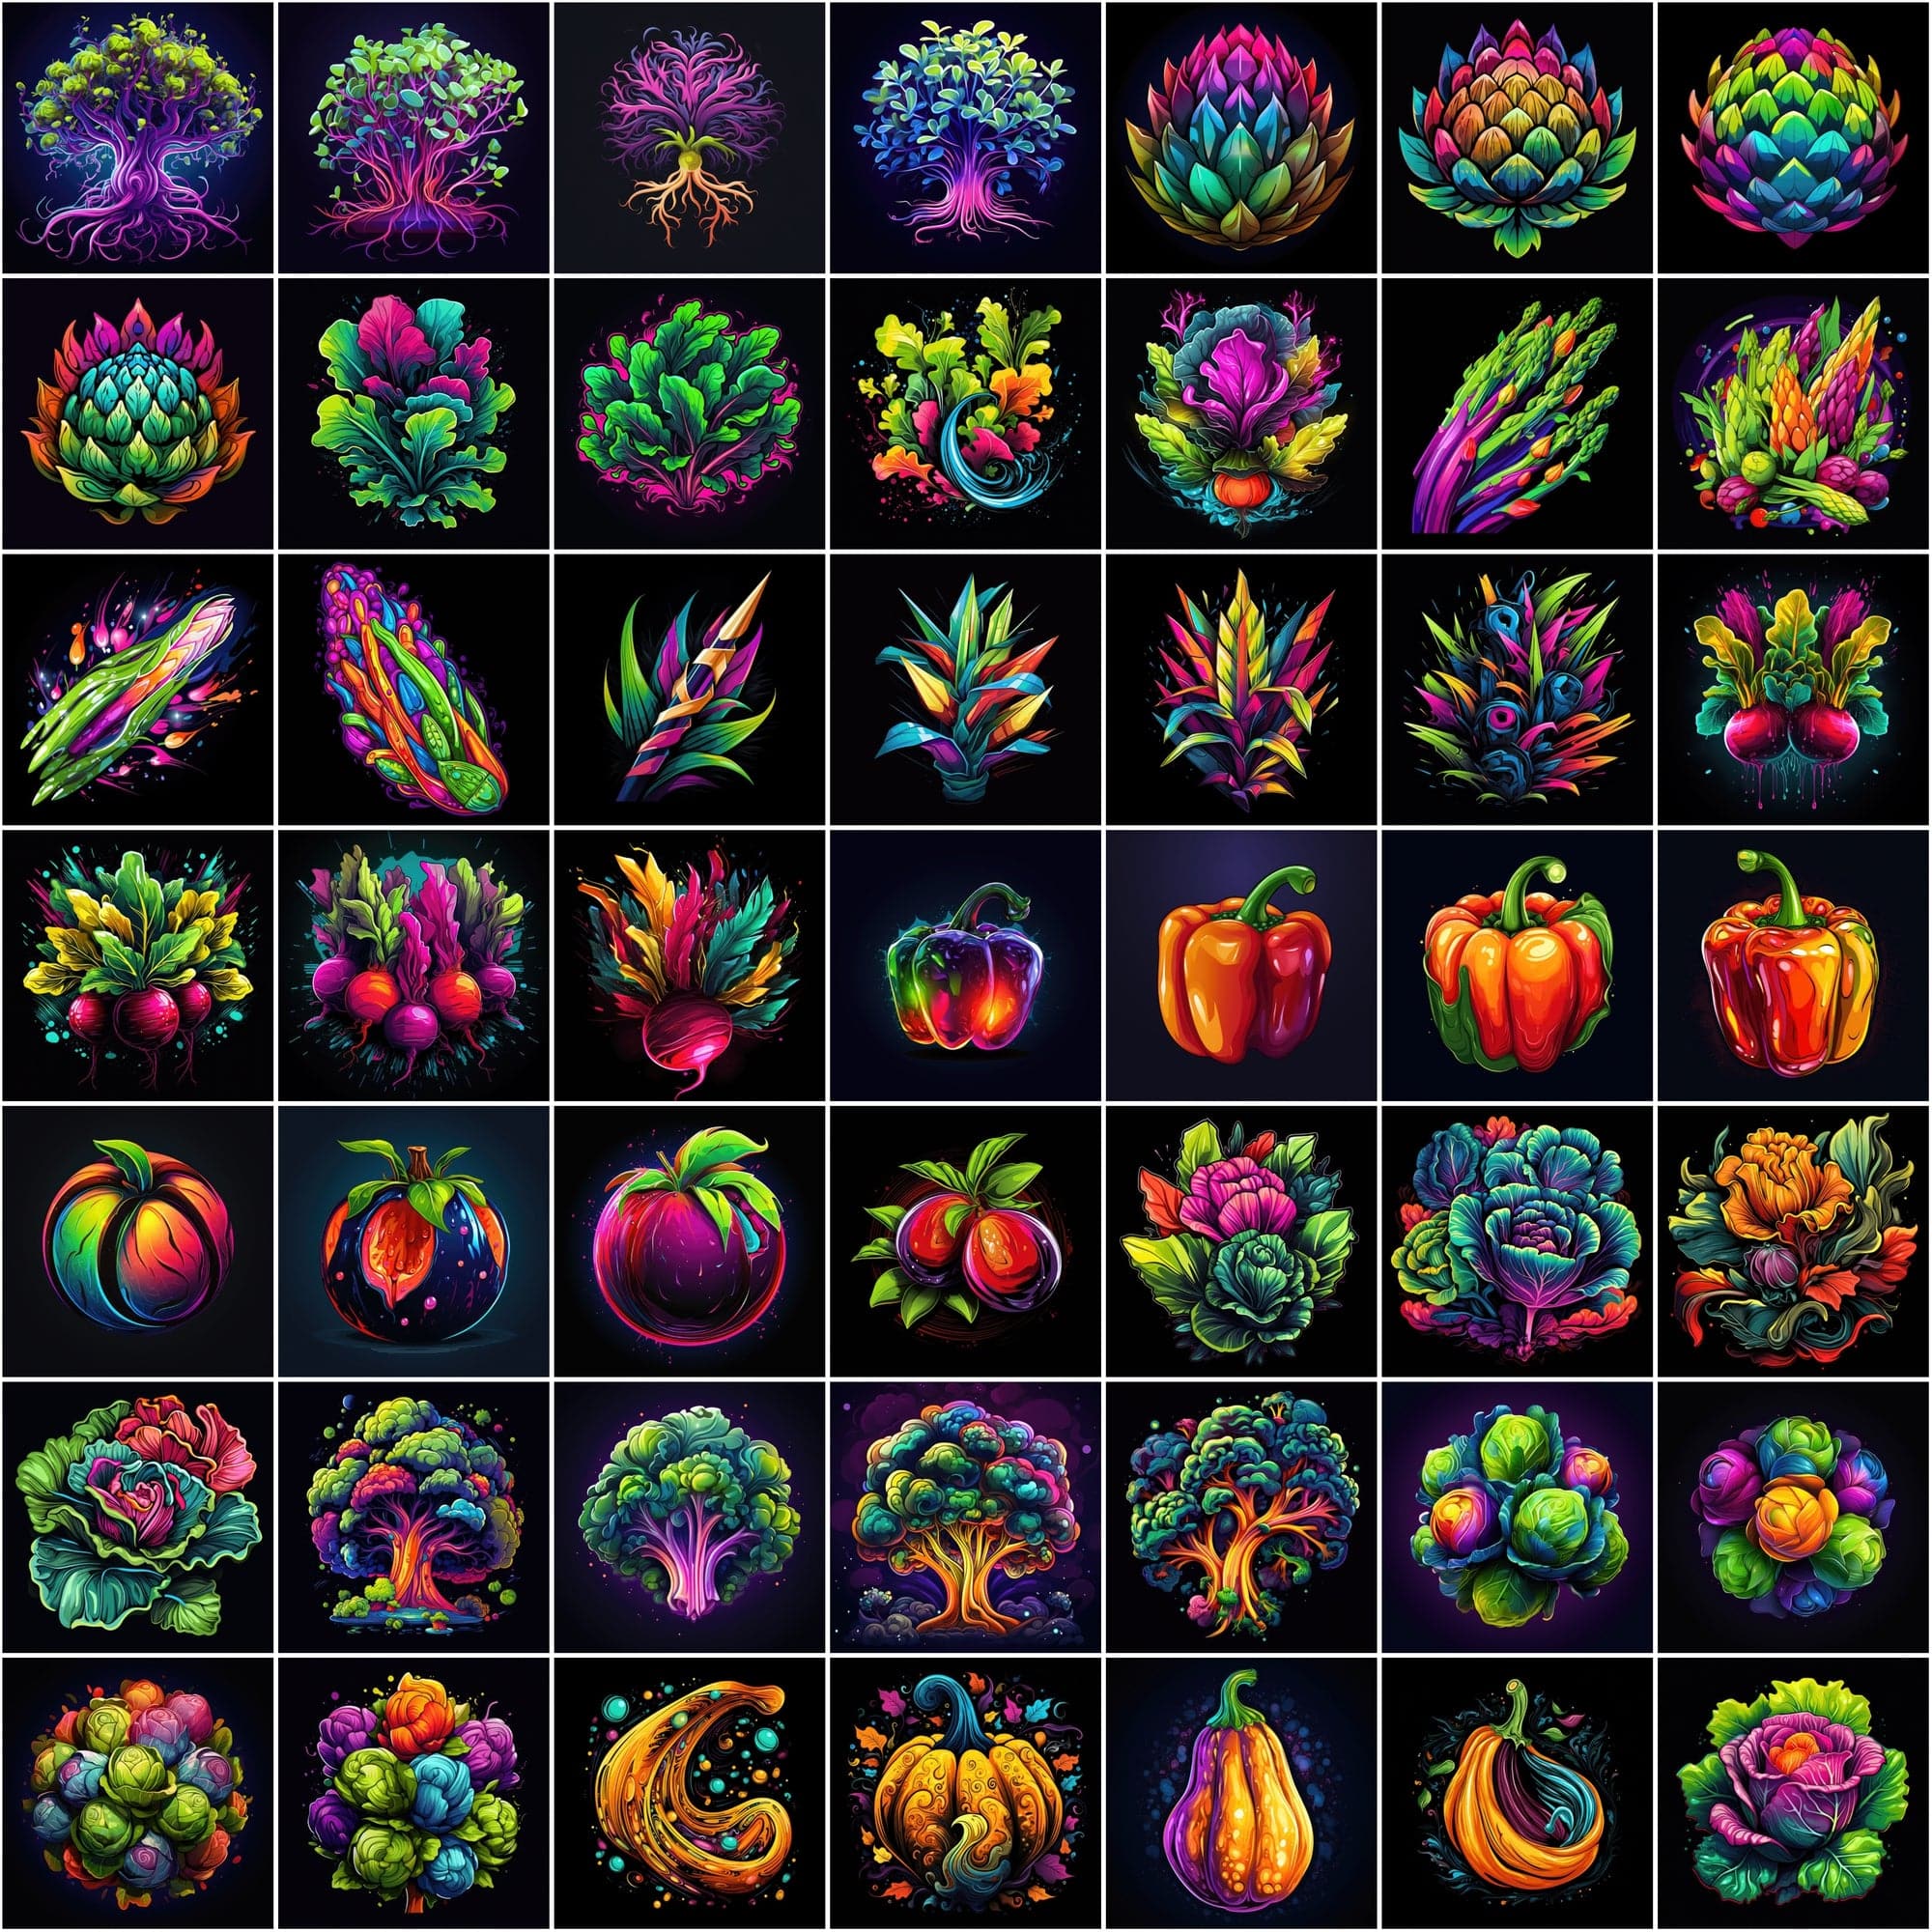 Unique Fruit and Vegetable Image Pack - 590 High-Resolution, Commercial License Included Digital Download Sumobundle